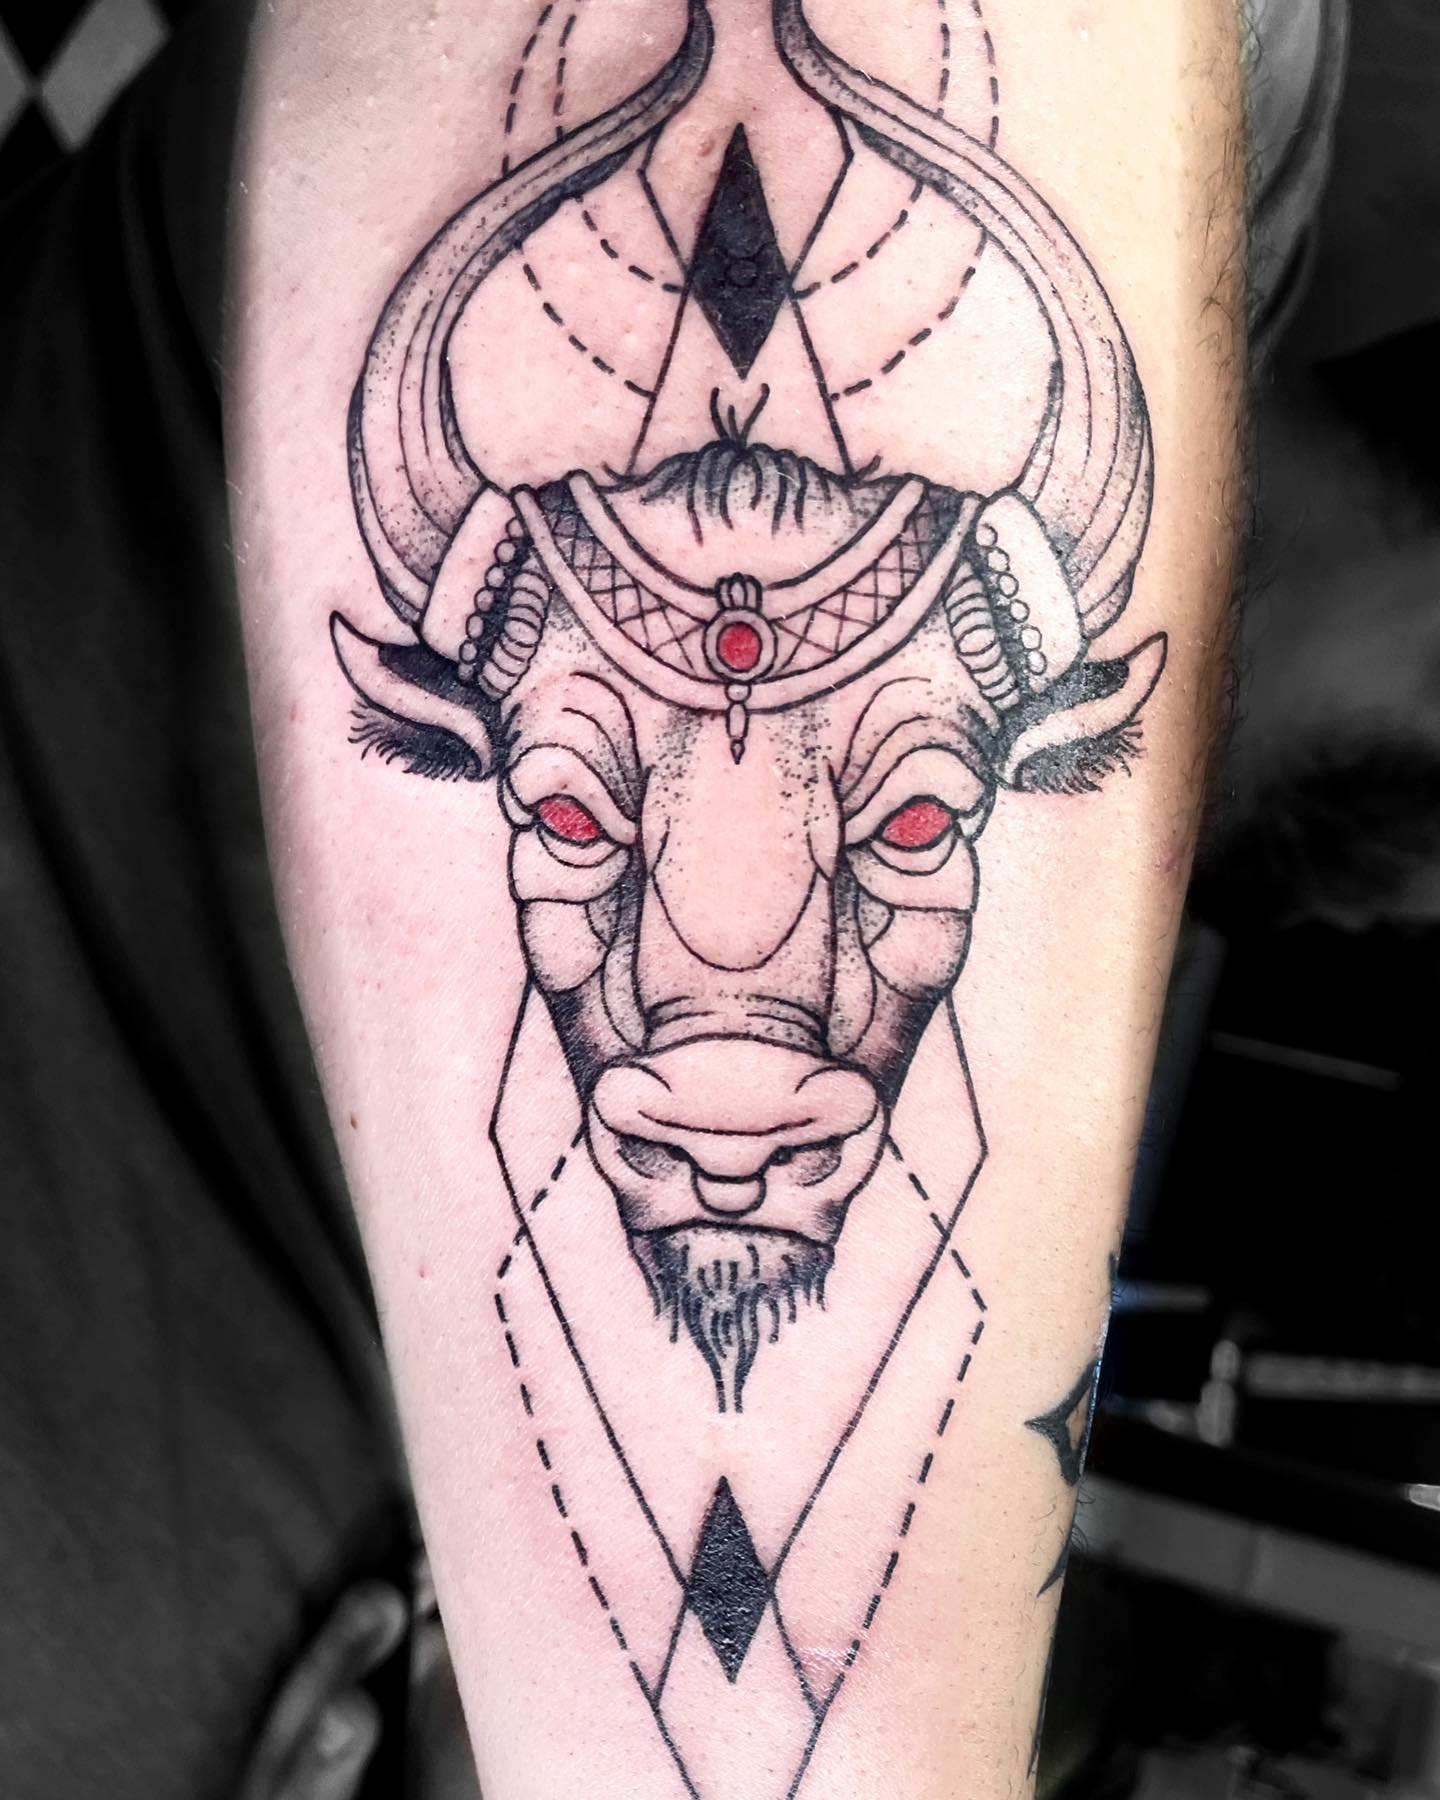 10 best Taurus zodiac sign tattoo designs for men   Онлайн блог о тату  IdeasTattoo